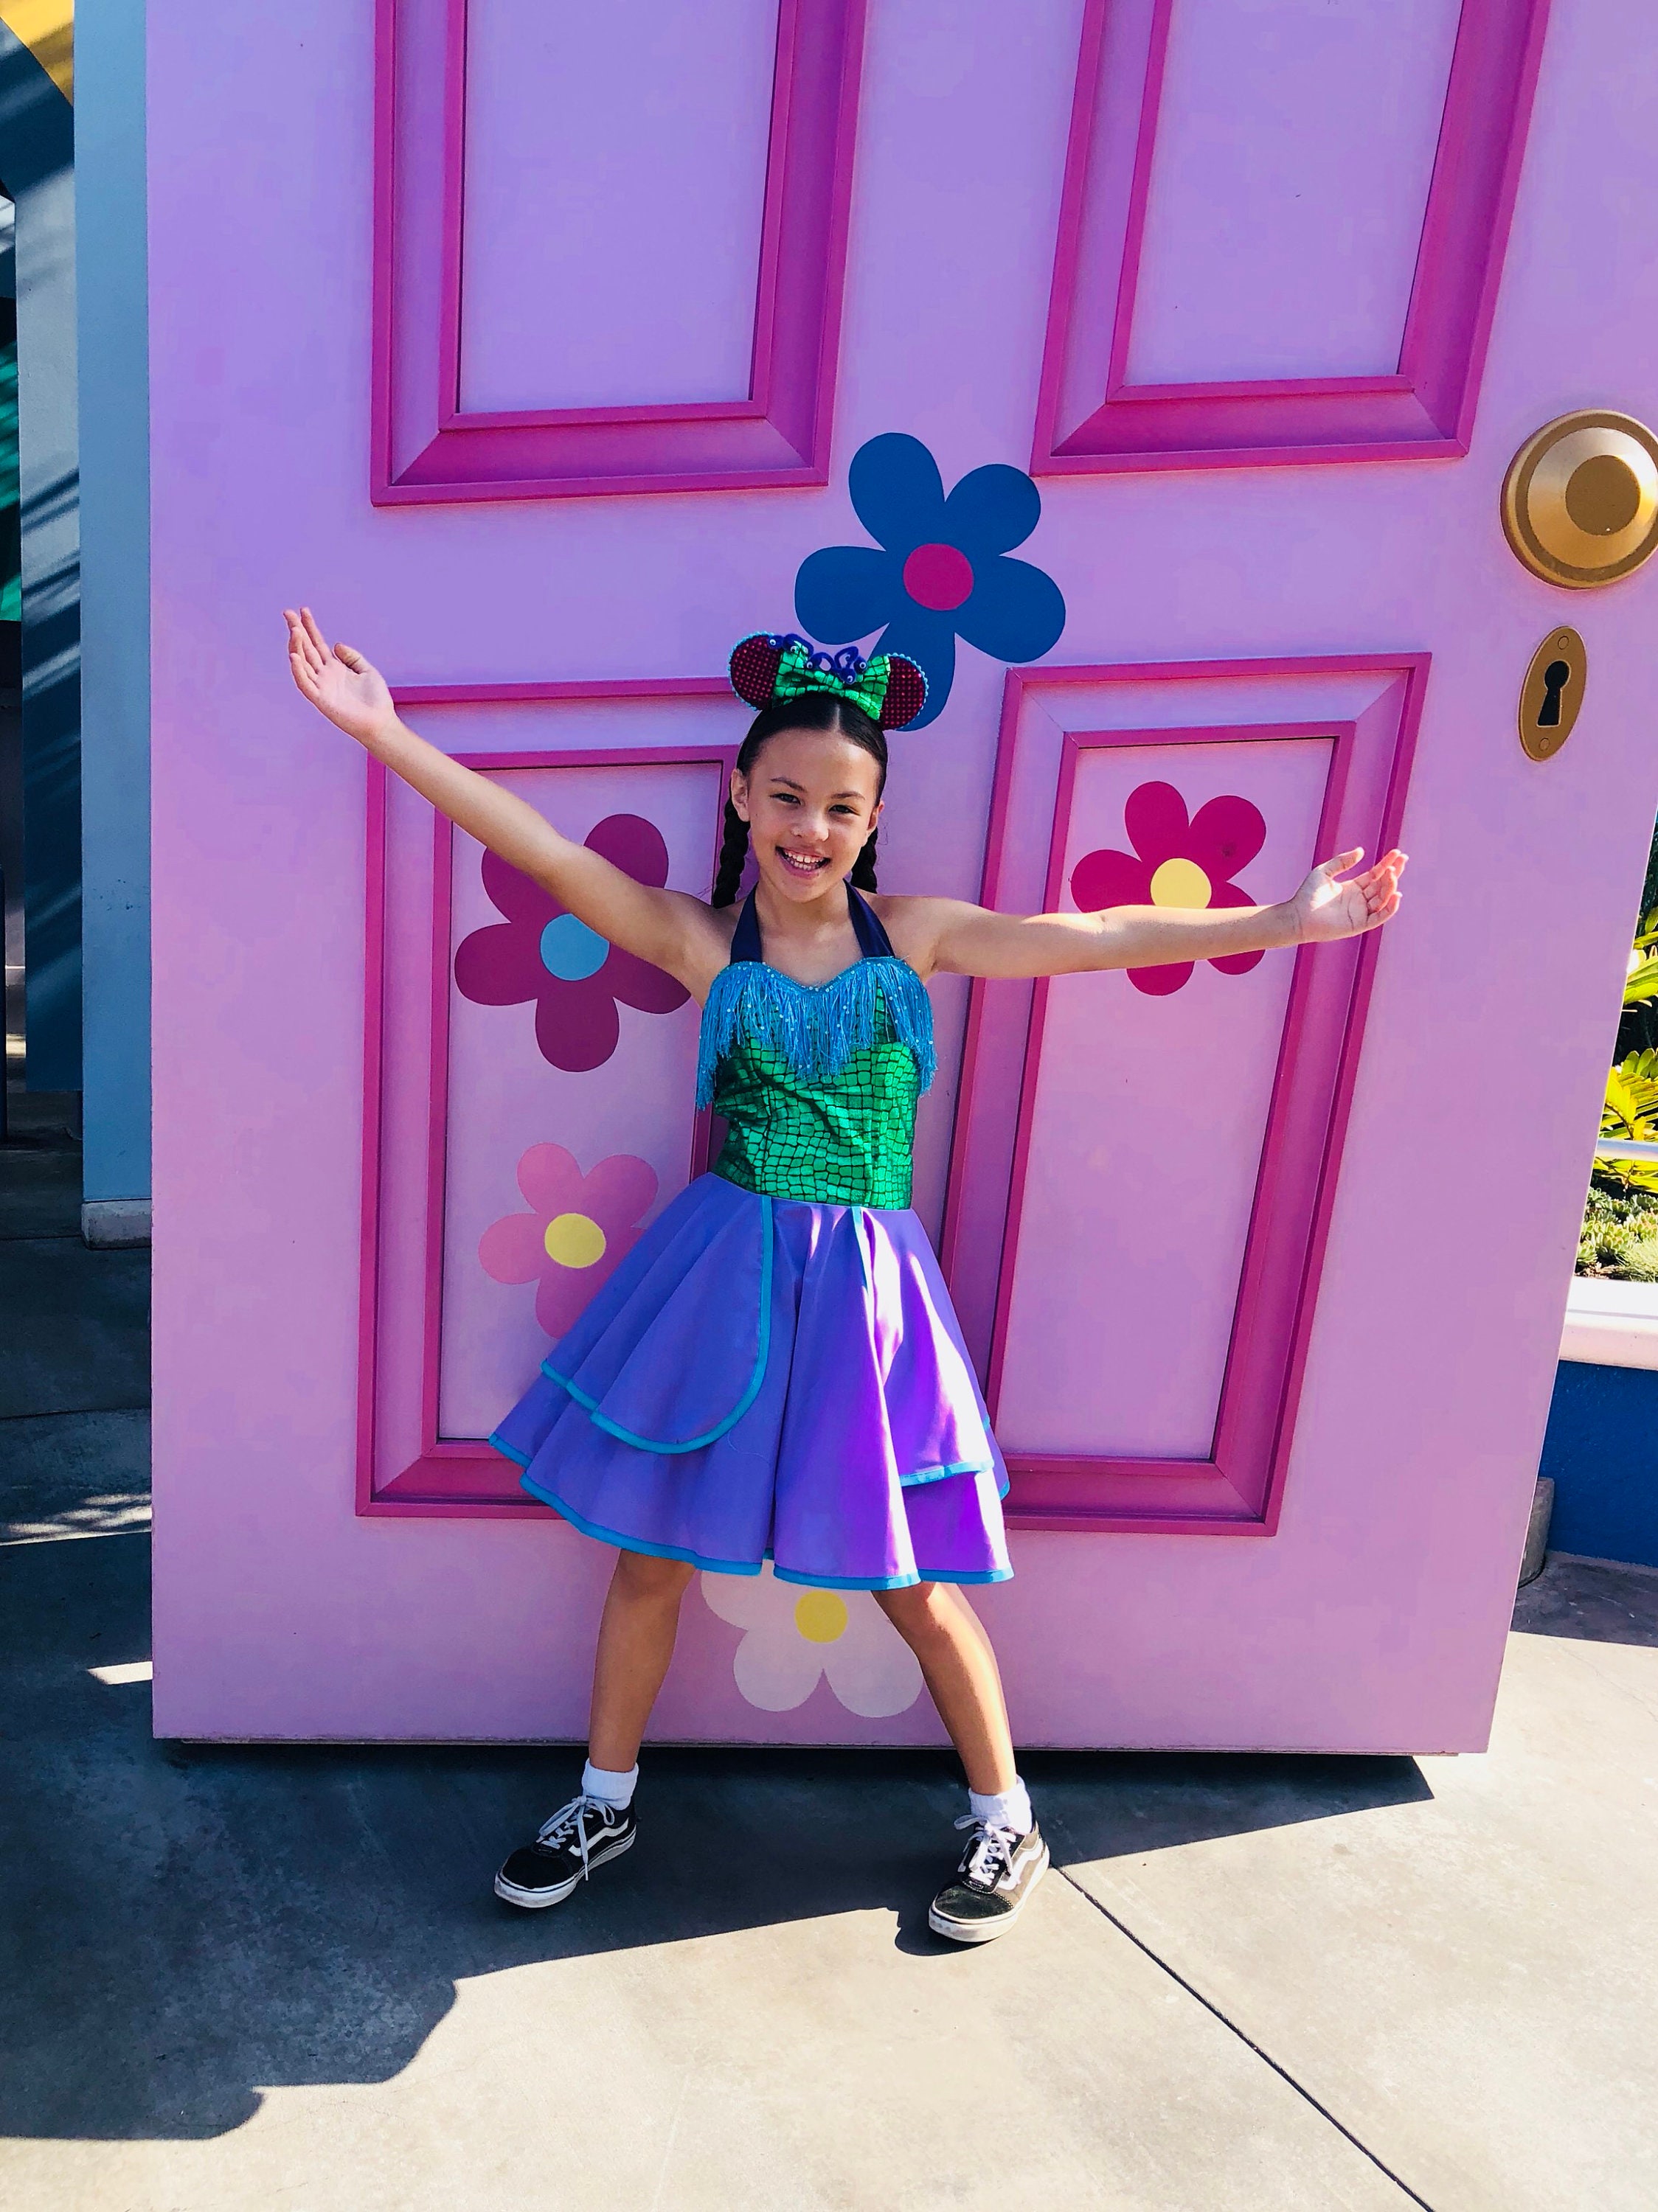 Kids' Disney Descendants Celia Multi-Coloured Outfit with Jacket & Leggings  Halloween Costume, Assorted Sizes